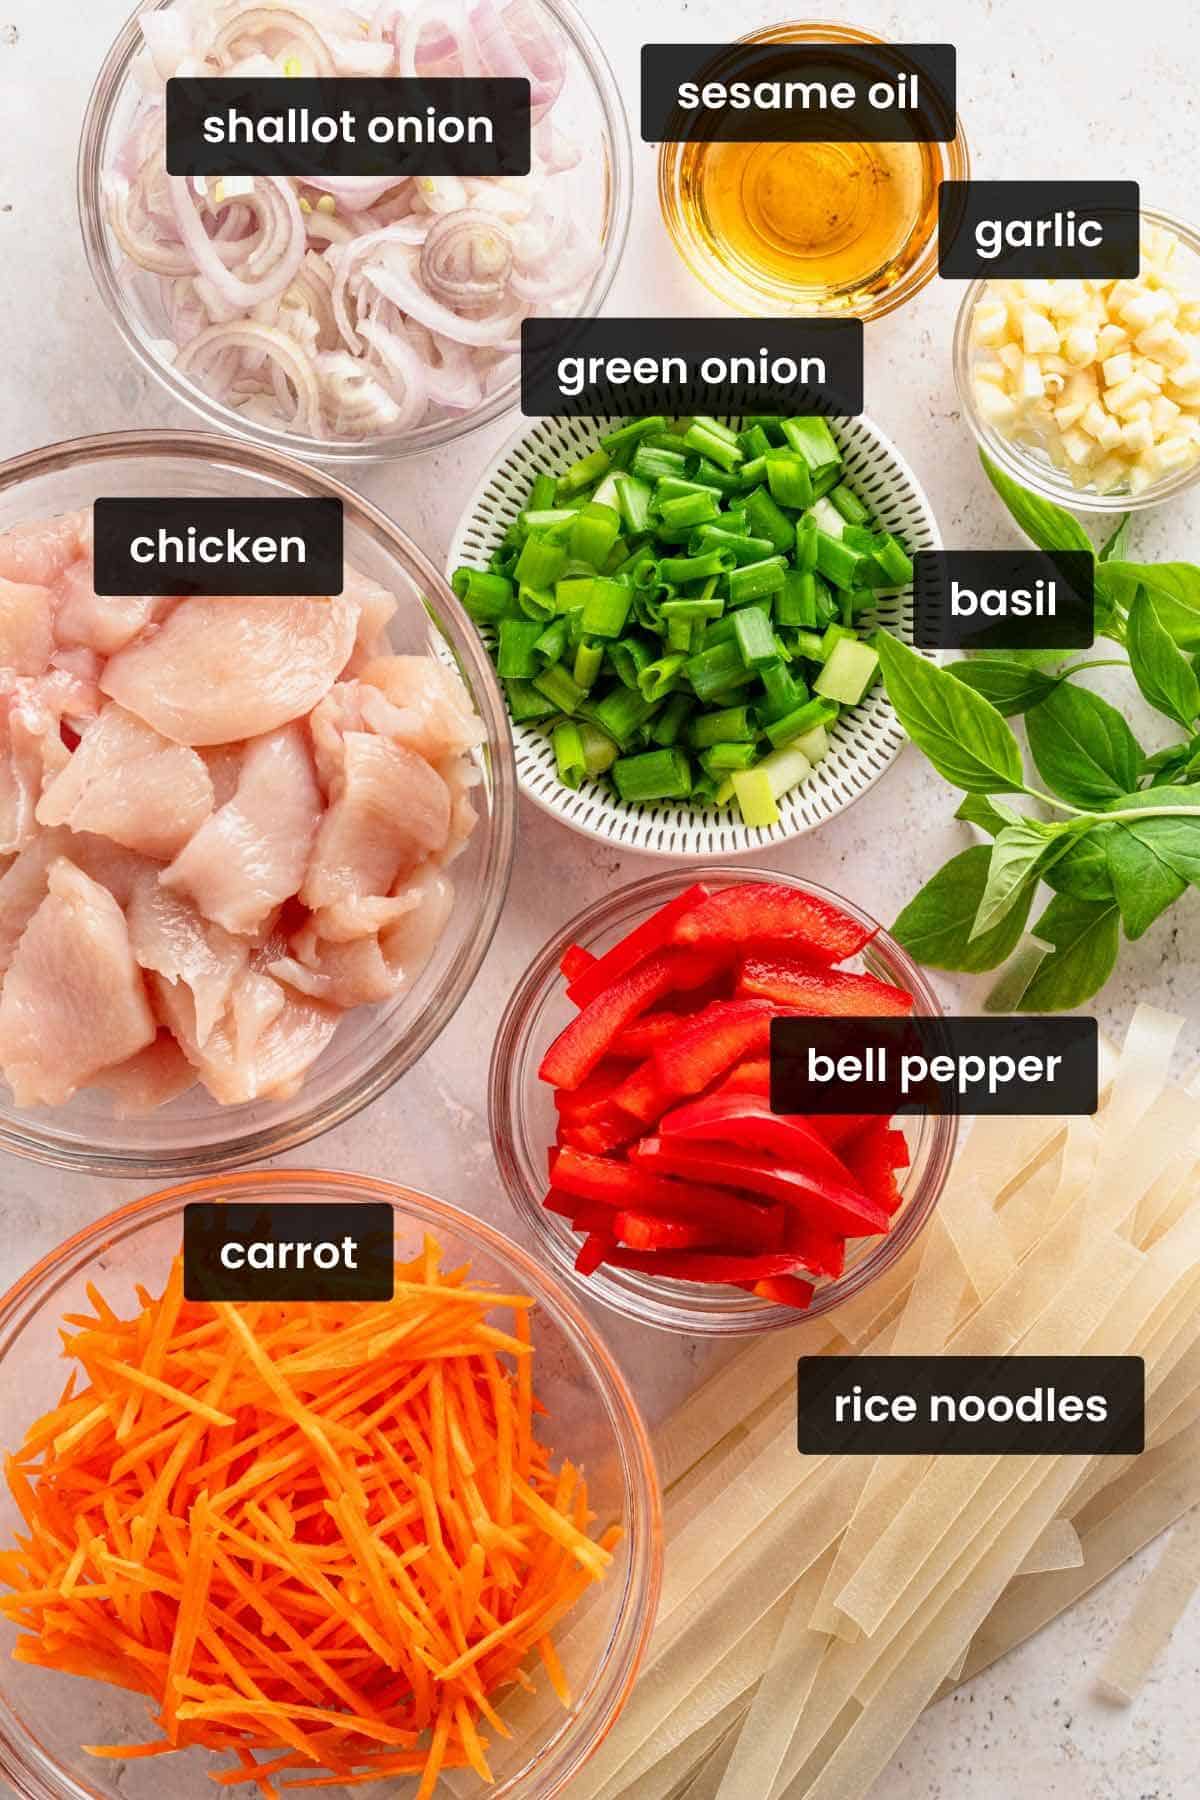 ingredients for drunken noodles with chicken.